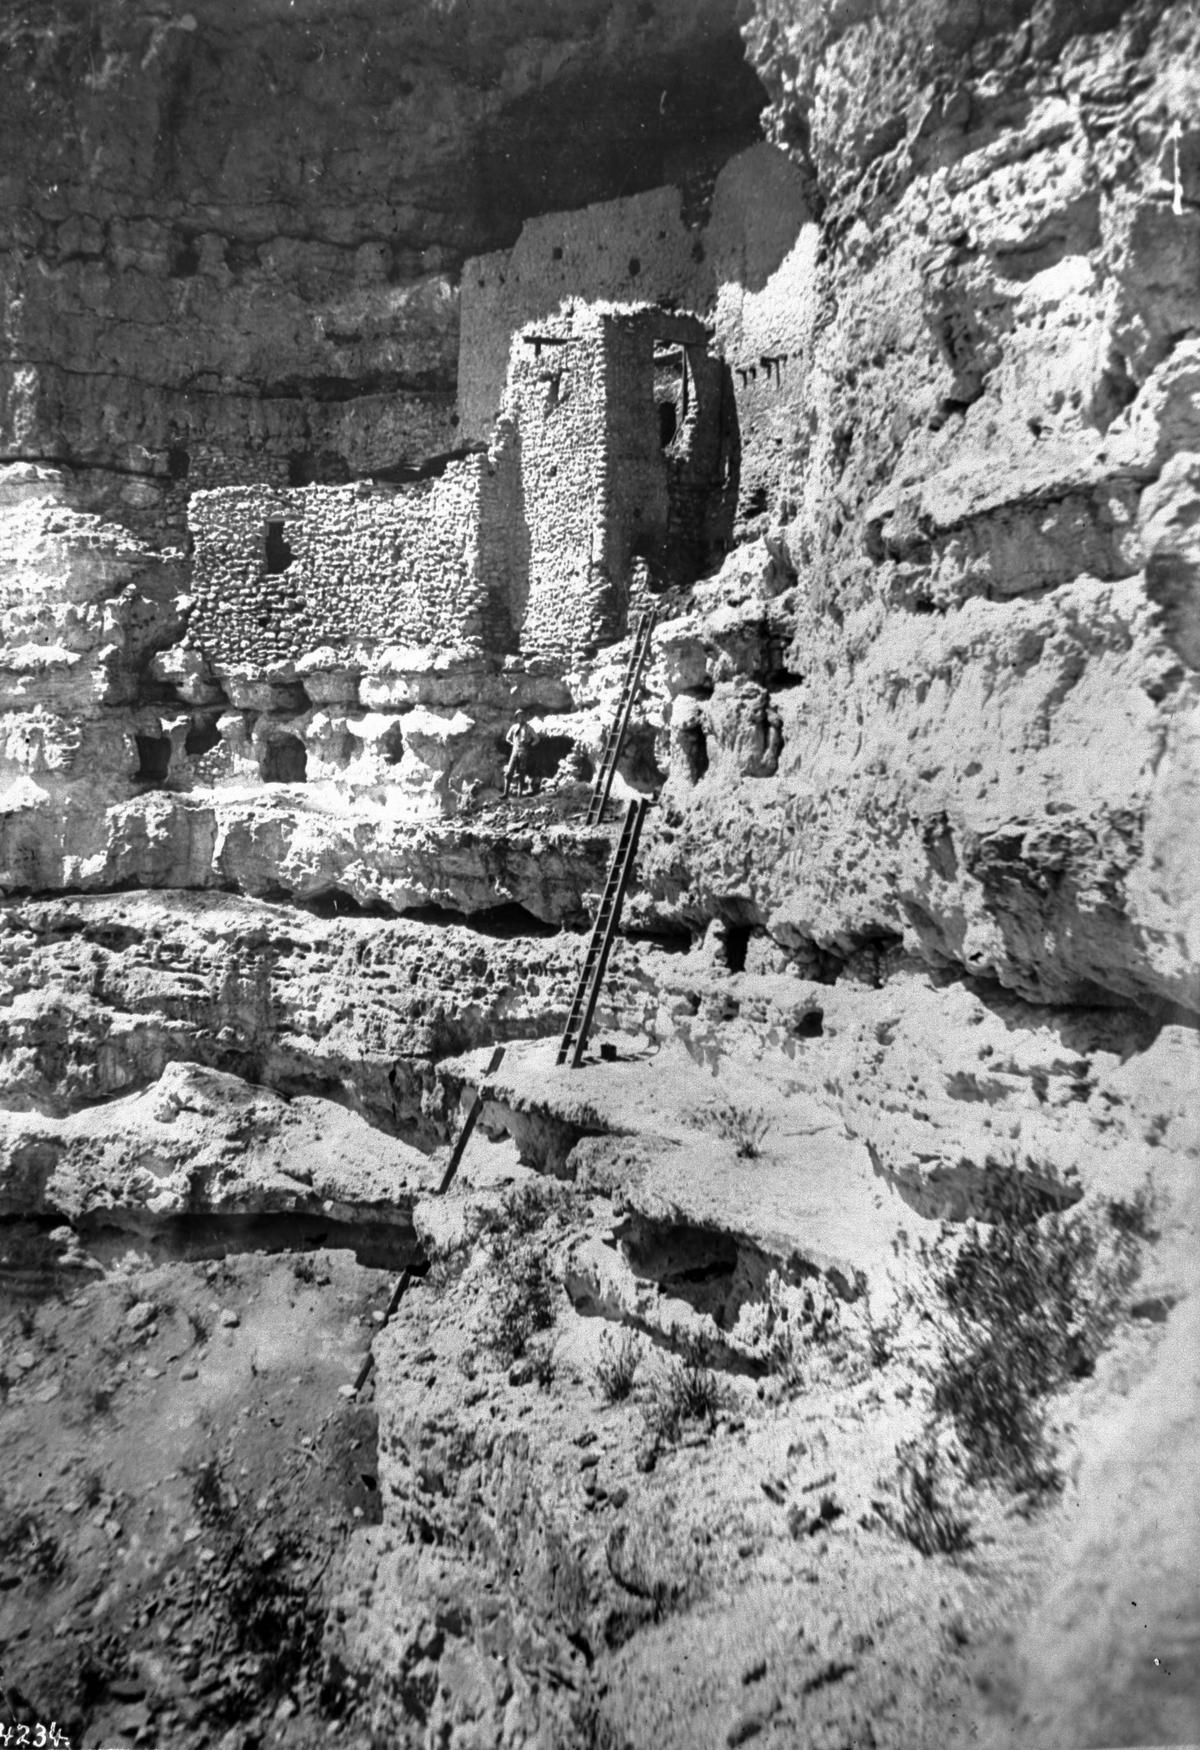 Montezuma Castle circa 1893-1900. (<a href="https://en.wikipedia.org/wiki/File:Montezuma%27s_Castle_near_Camp_Verde,_Arizona,_ca.1893-1900_(CHS-4234).jpg">Public Domain</a>)